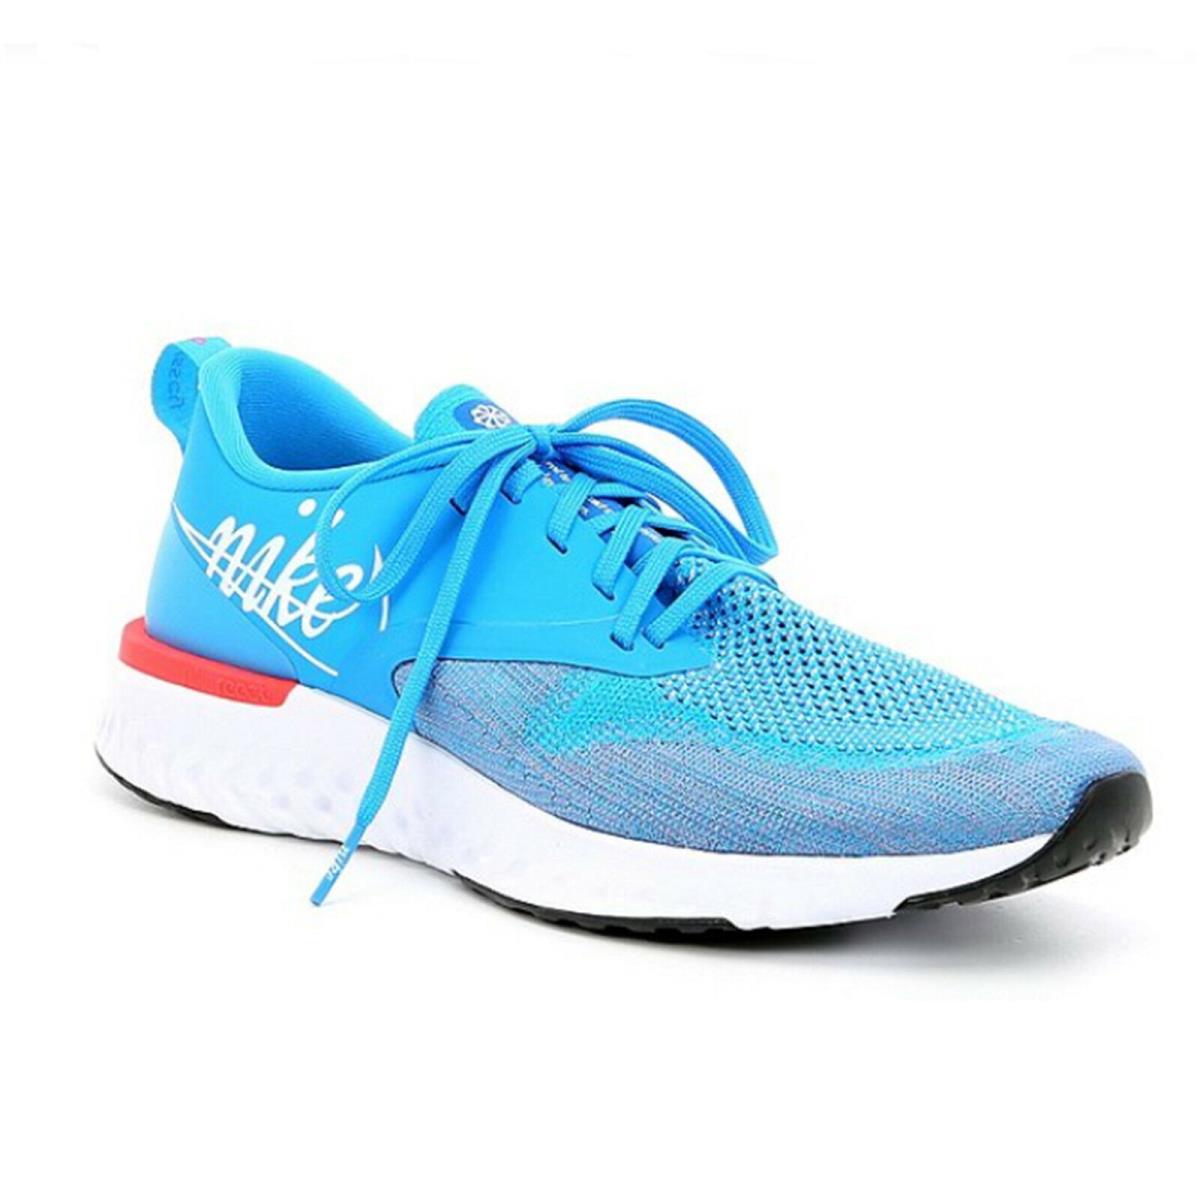 Nike shoes  - BLUE HERO / WHITE-STELLAR INDIGO , BLUE HERO / WHITE-STELLAR INDIGO Manufacturer 7